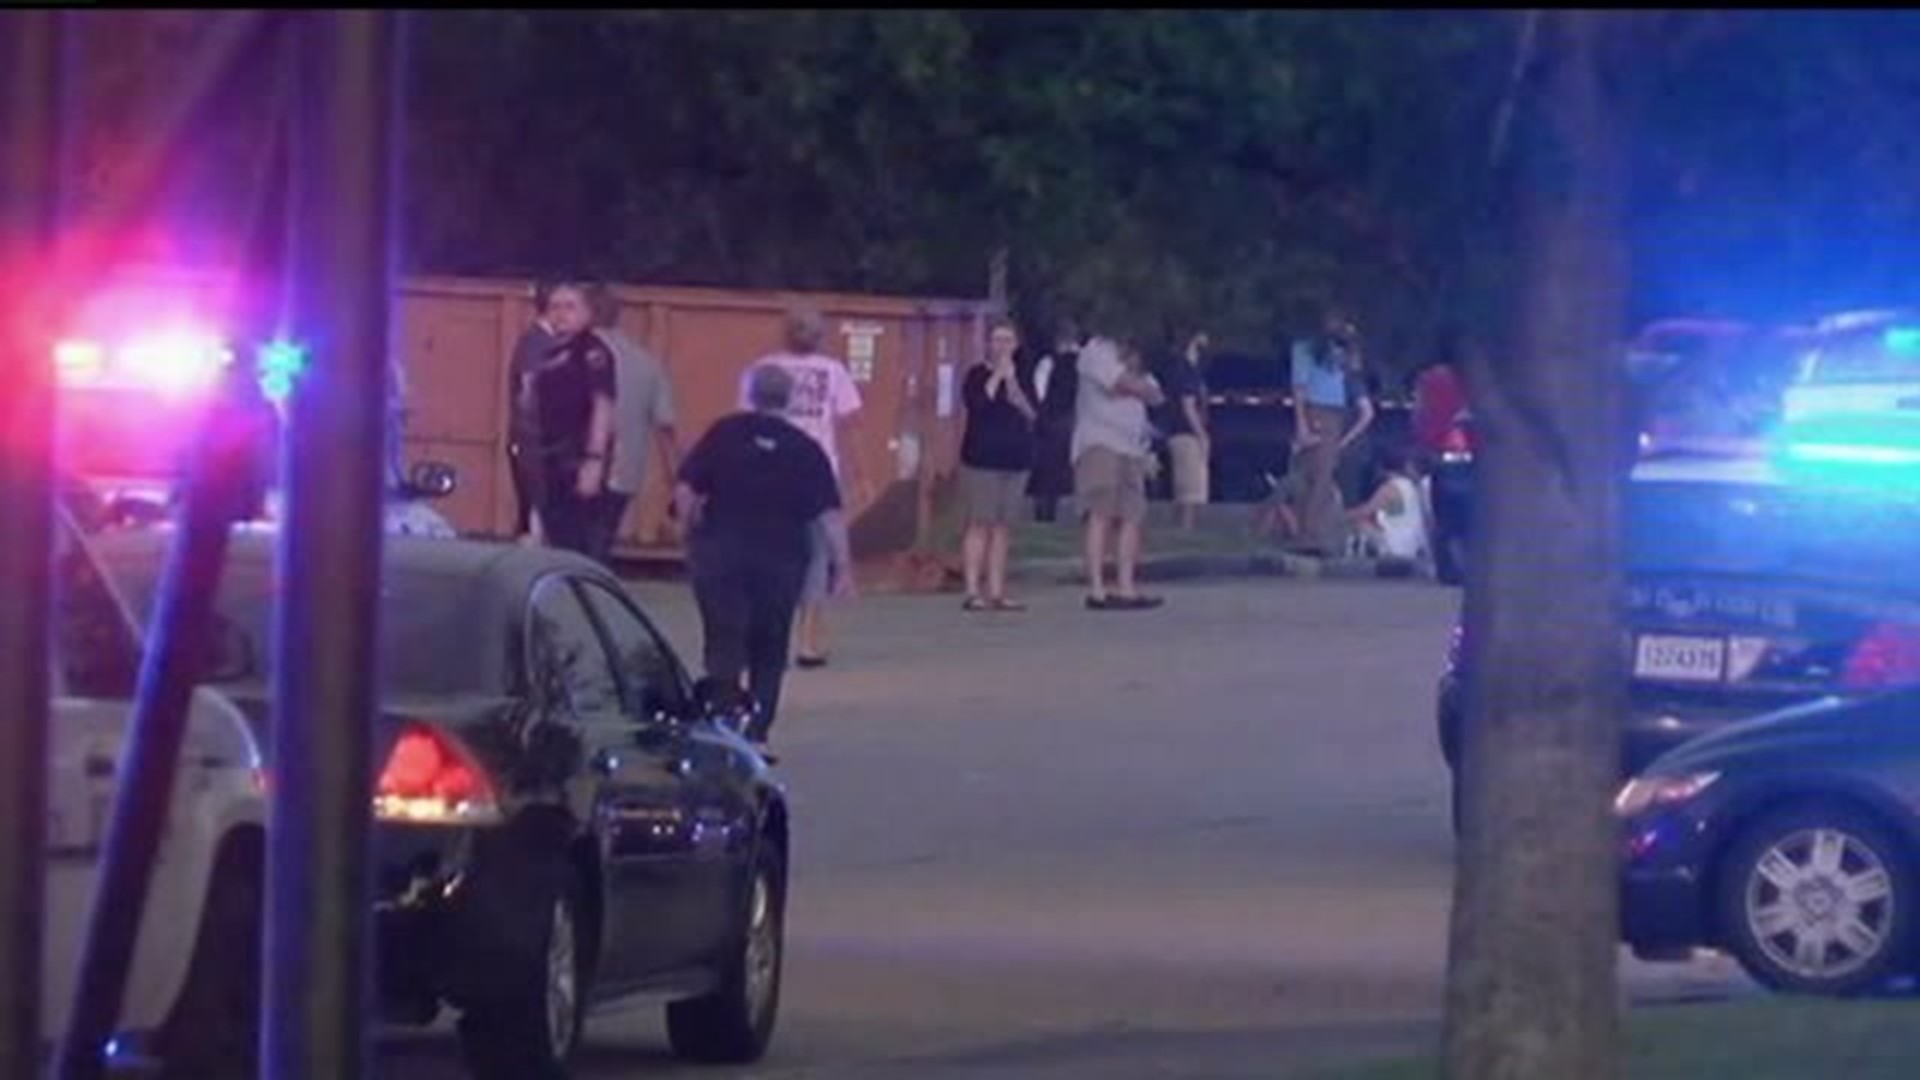 Man described as a drifter kills 2, himself in Lafayette, Louisiana, movie theater